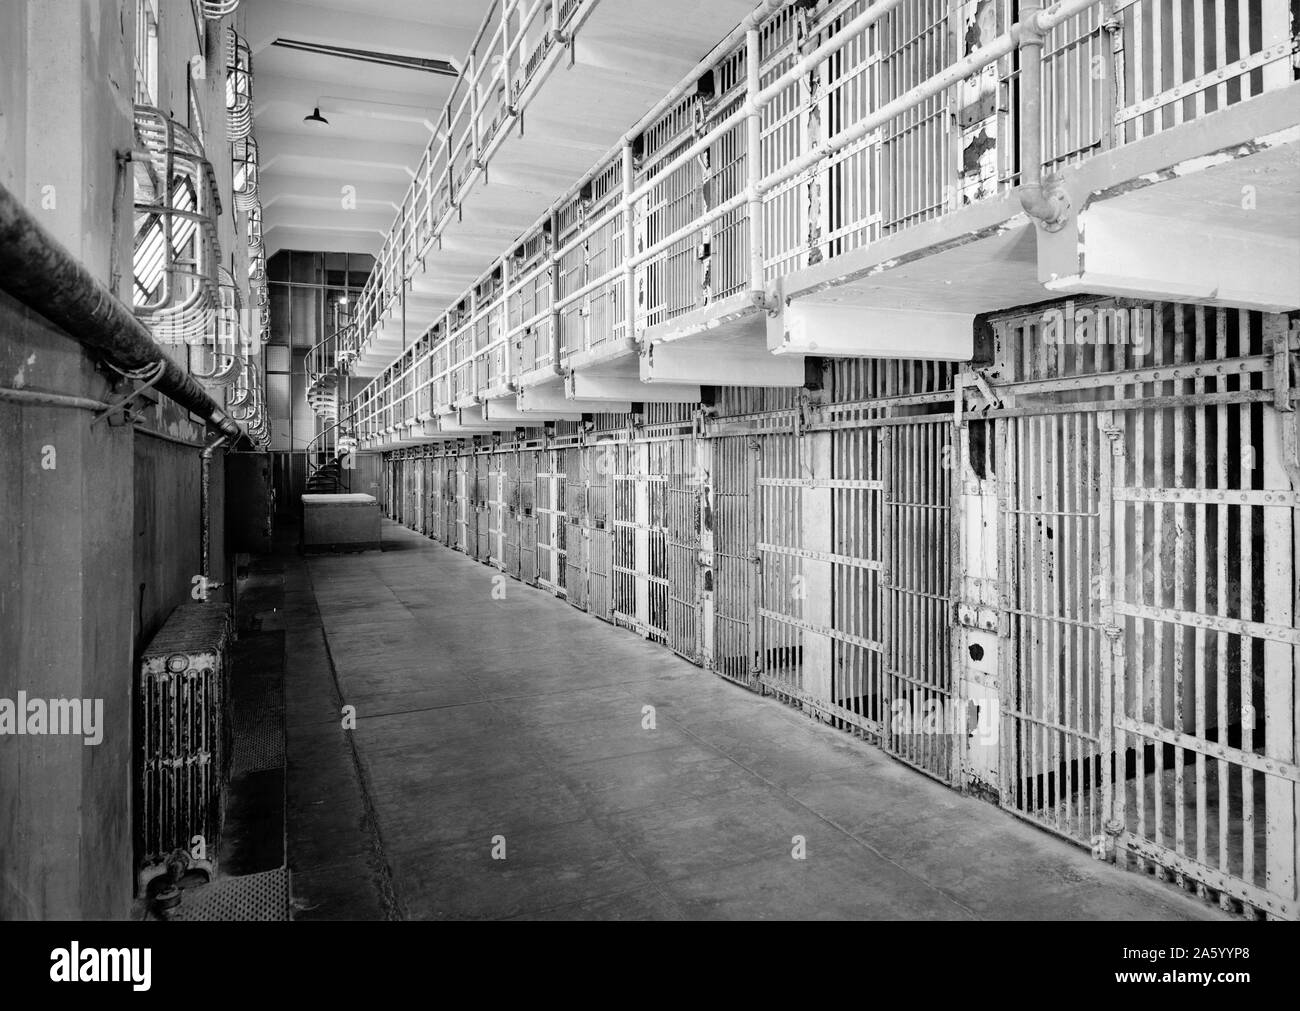 Südwest Blick auf Zellenblock "A" in Alcatraz Gefängnis Insel Alcatraz, San Francisco Bay, USA. Stockfoto